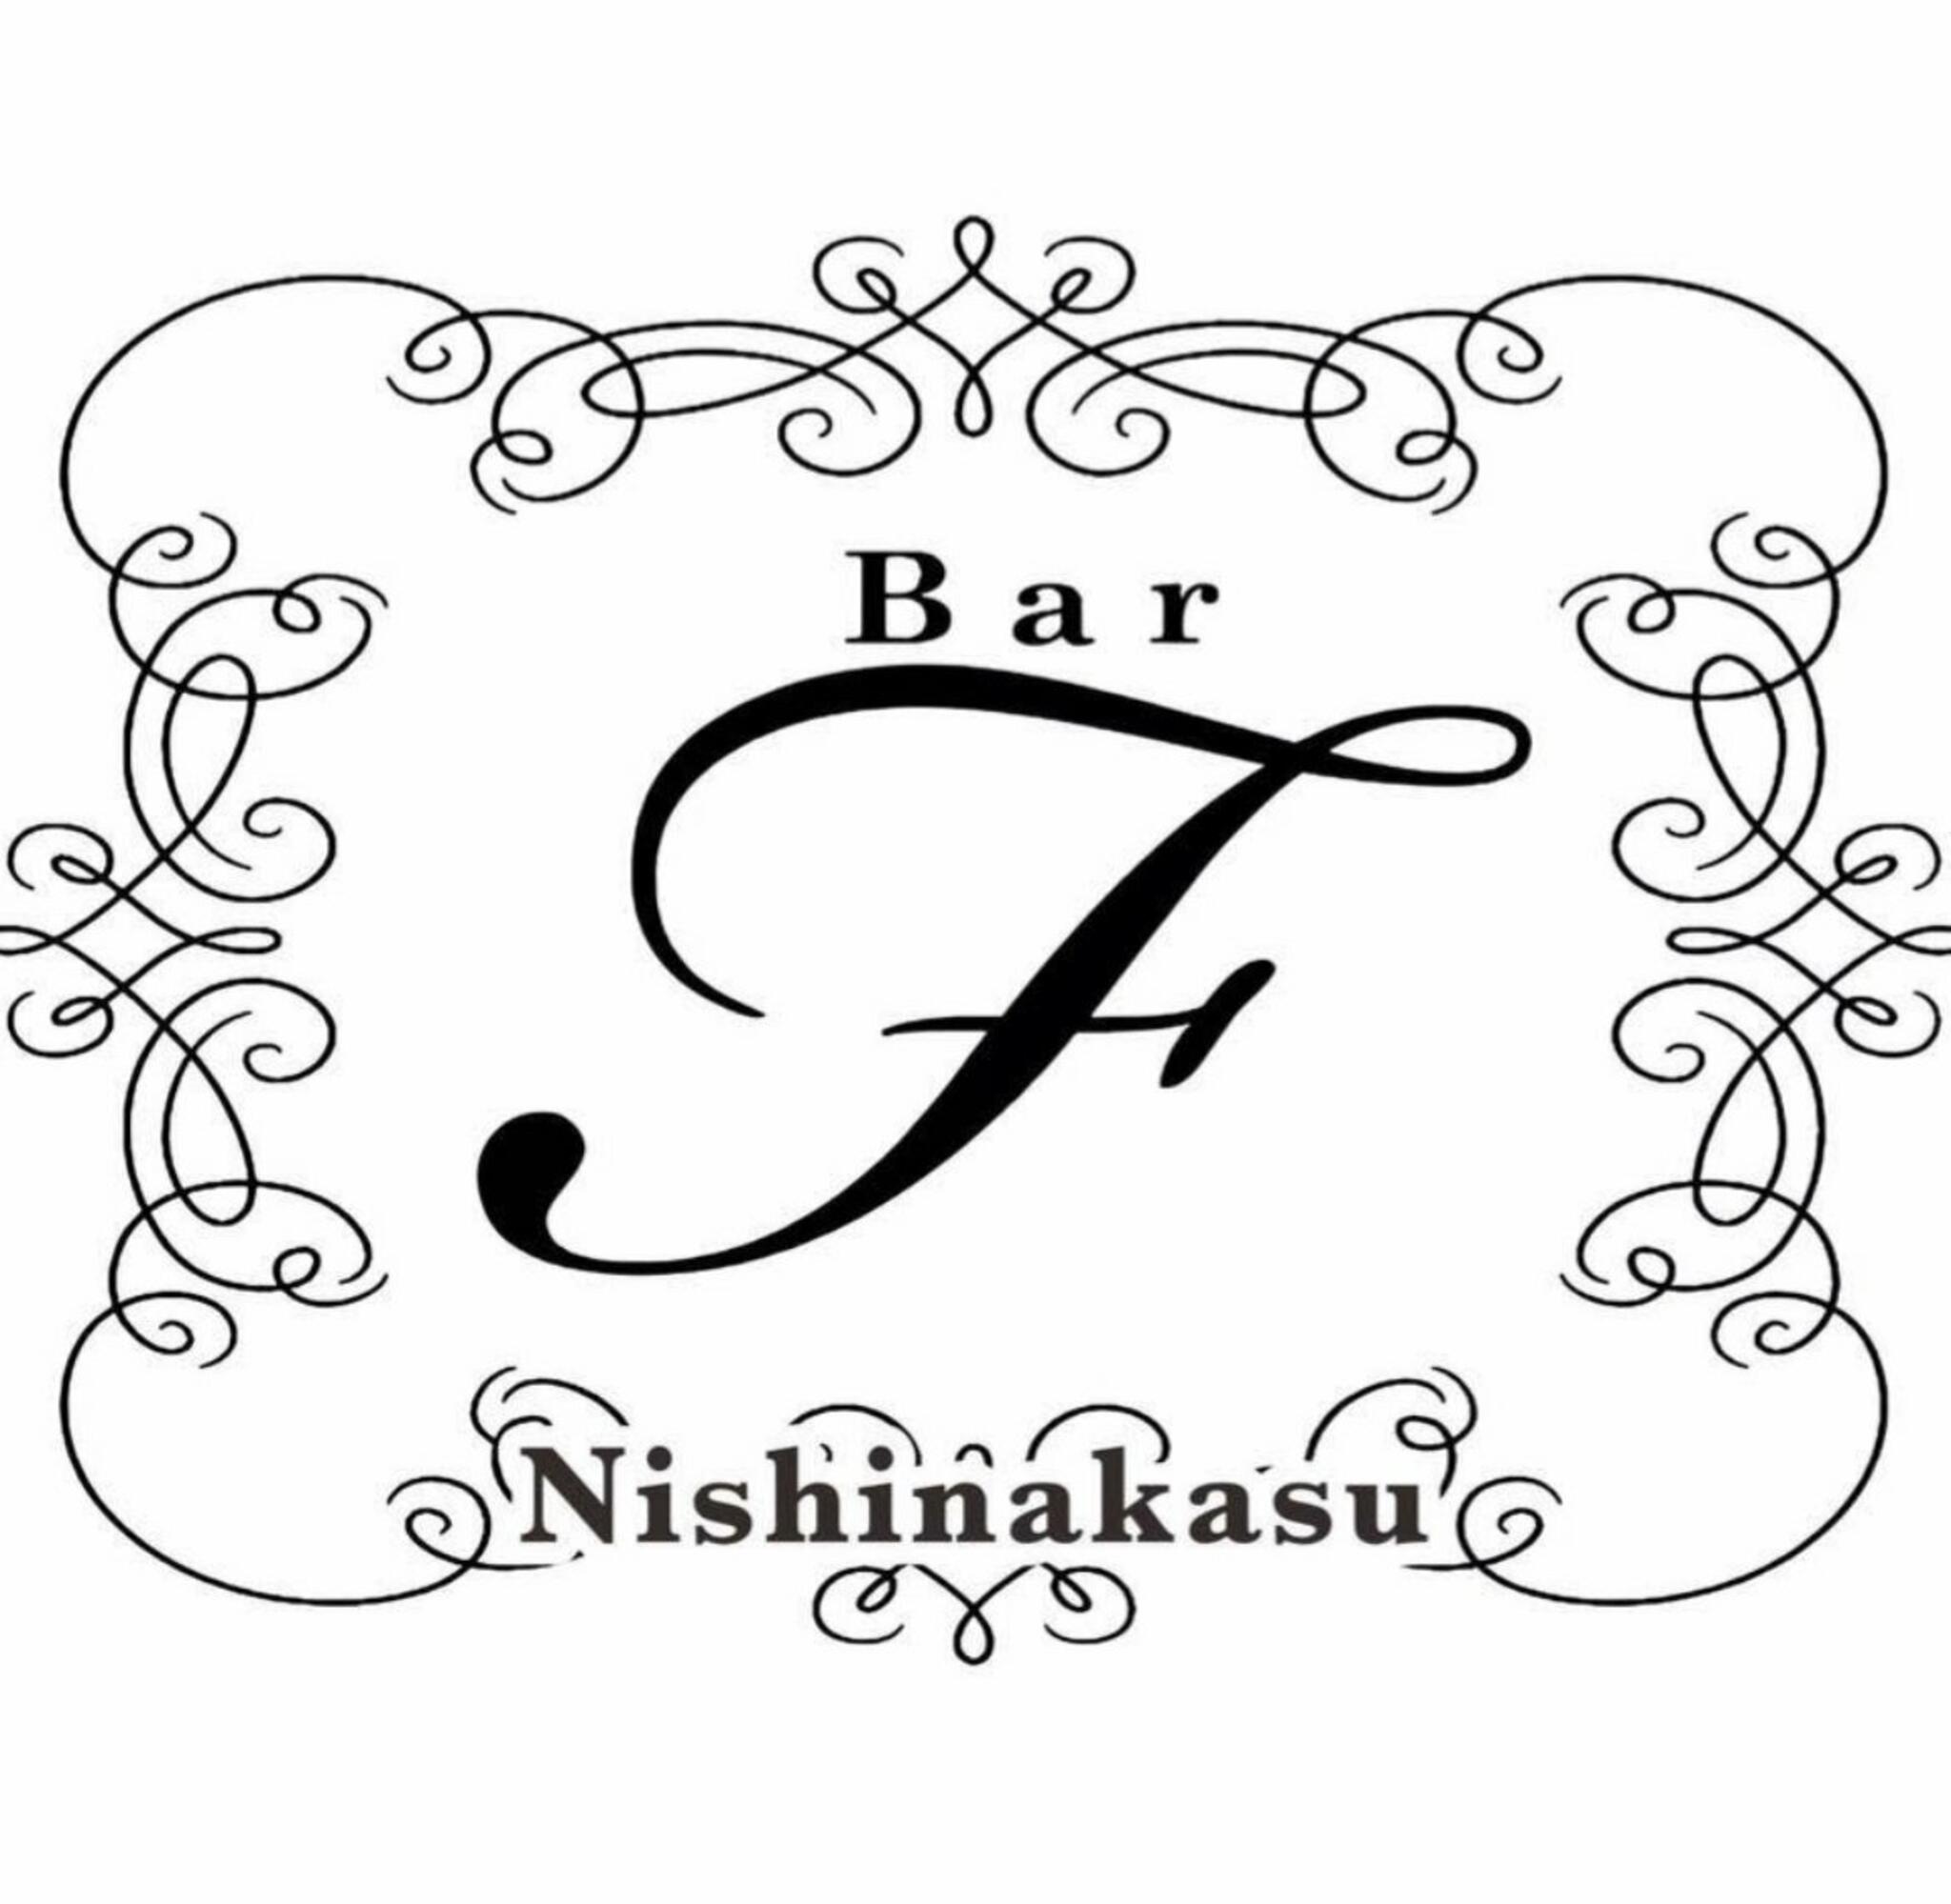 Bar F nishinakasuの代表写真1